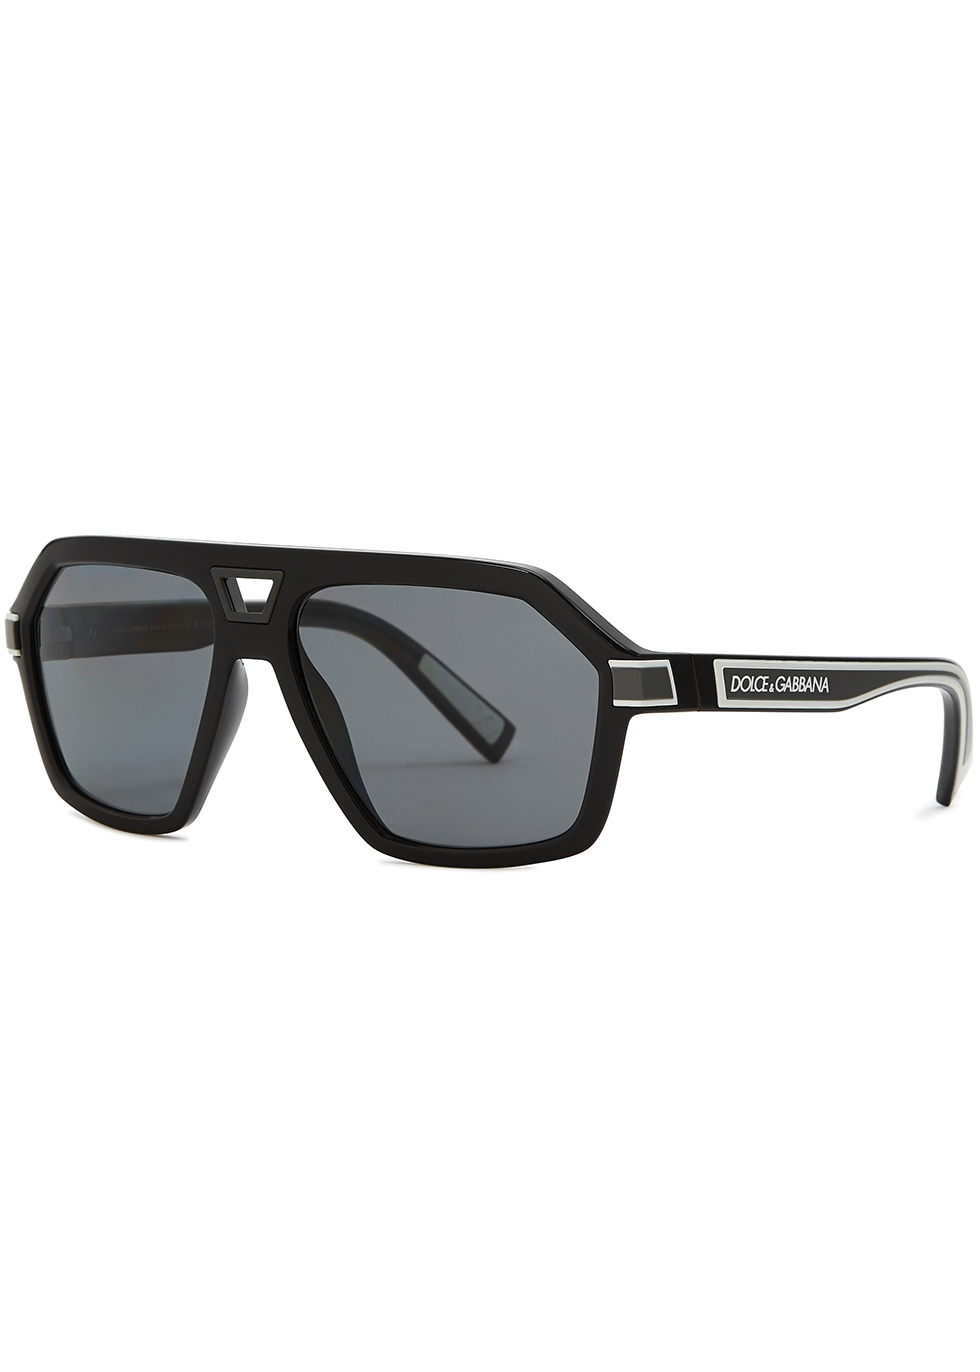 D&G Black aviator sunglasses - Harvey Nichols